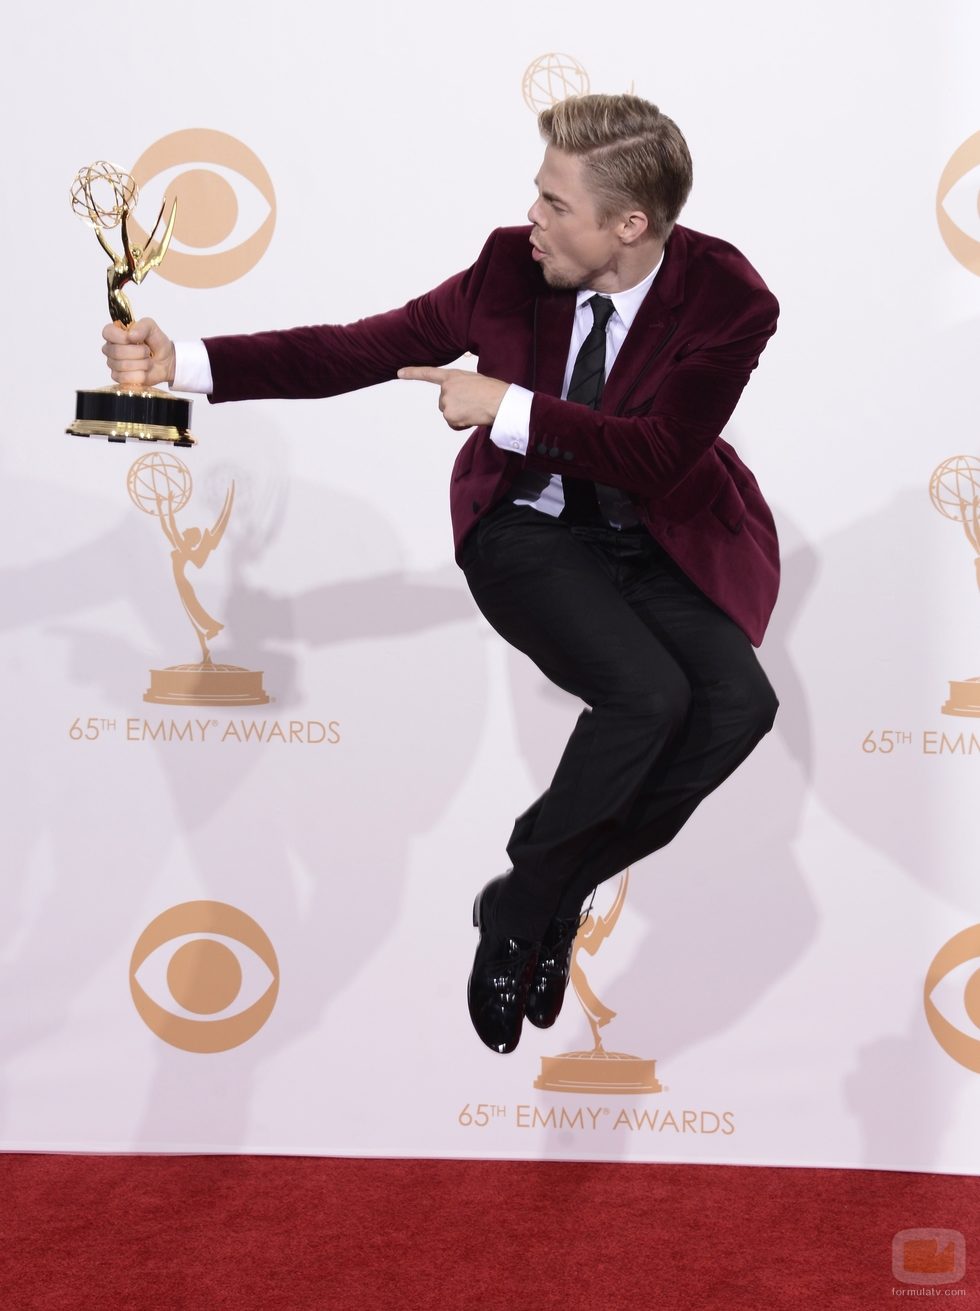 Derek Hough salta con el Emmy 2013 de 'Dancing with the Stars'